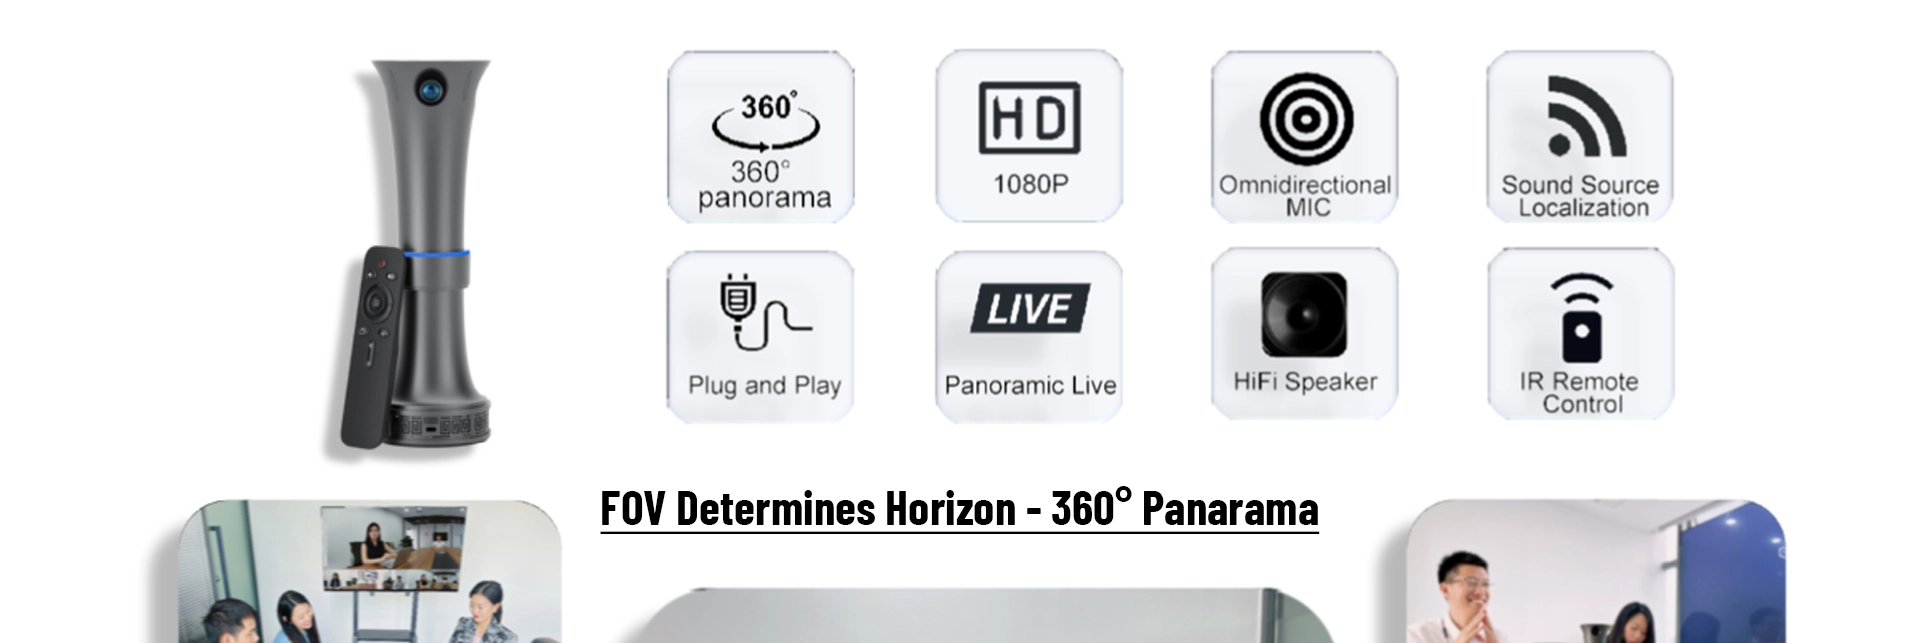 Panoramic 360-degree Video Conference Camera na may Speakerphone.